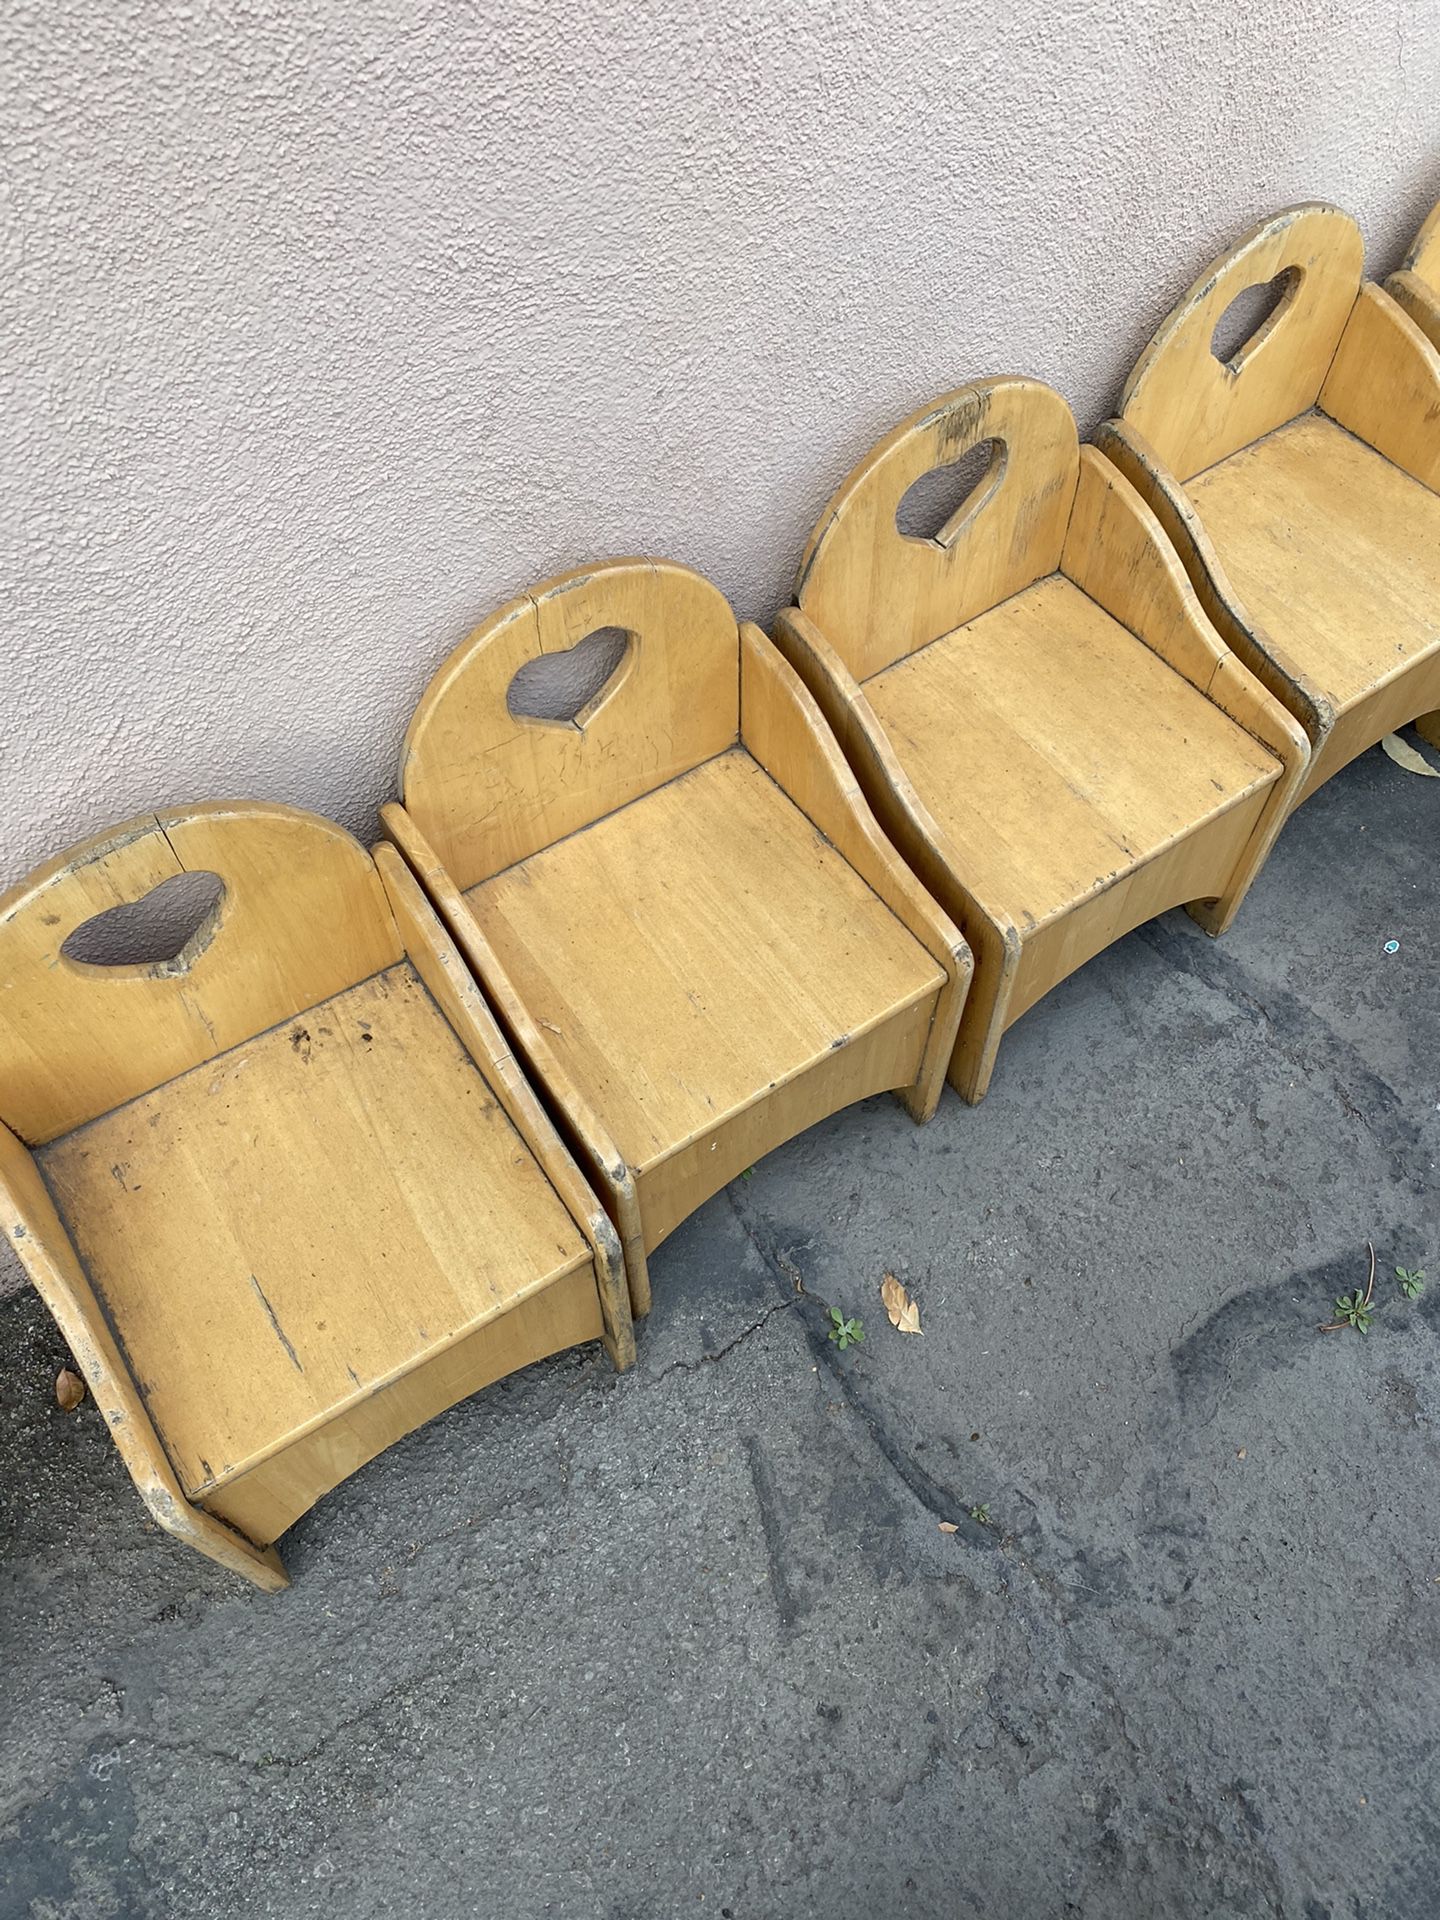 Free wood chairs